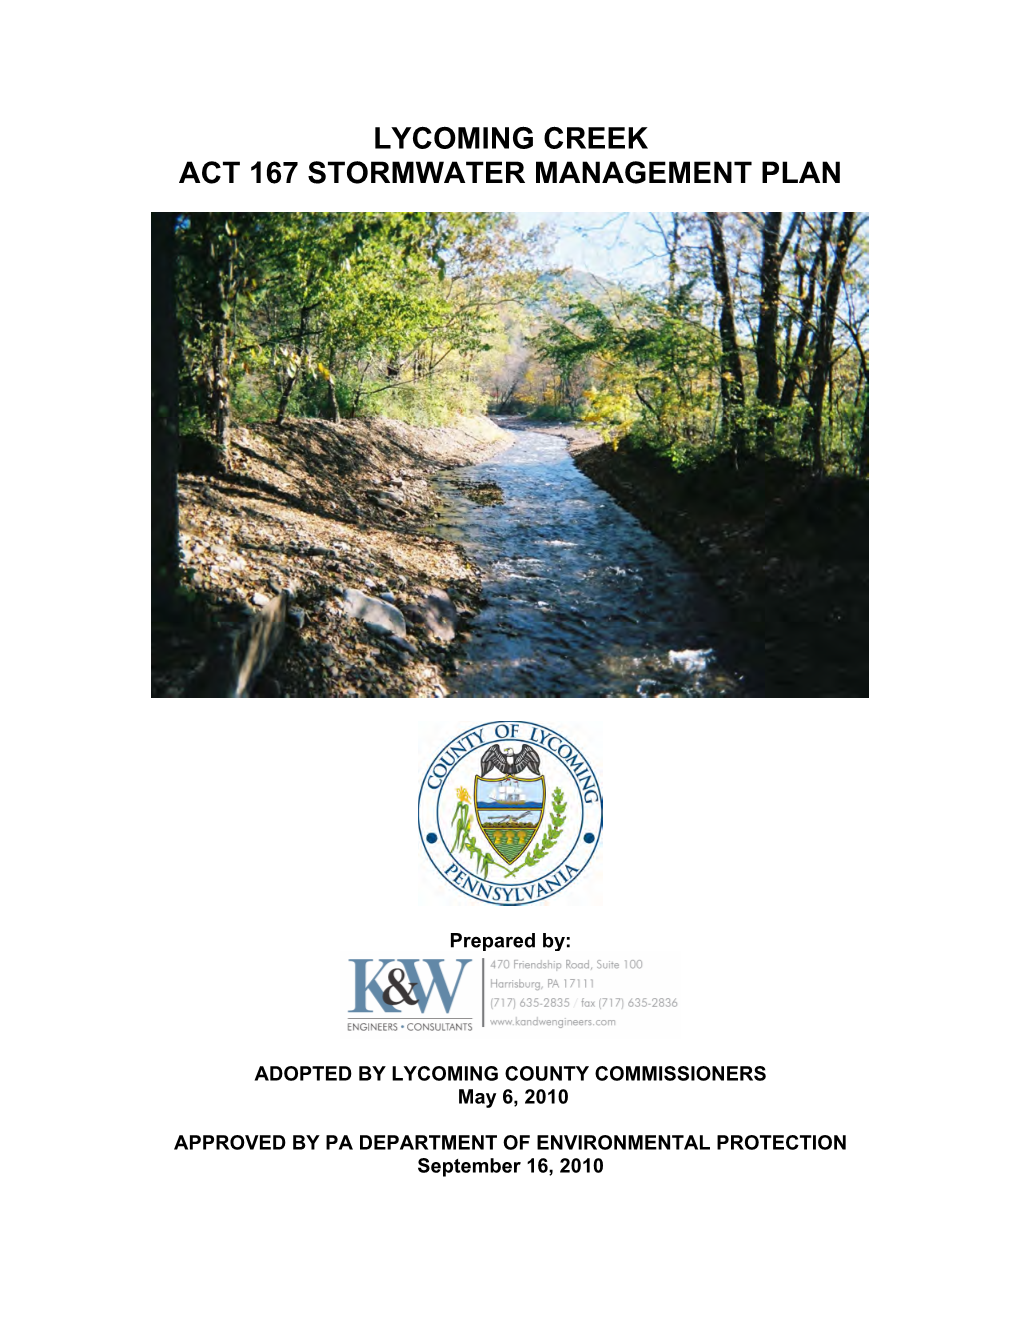 Lycoming Creek Act 167 Stormwater Management Plan